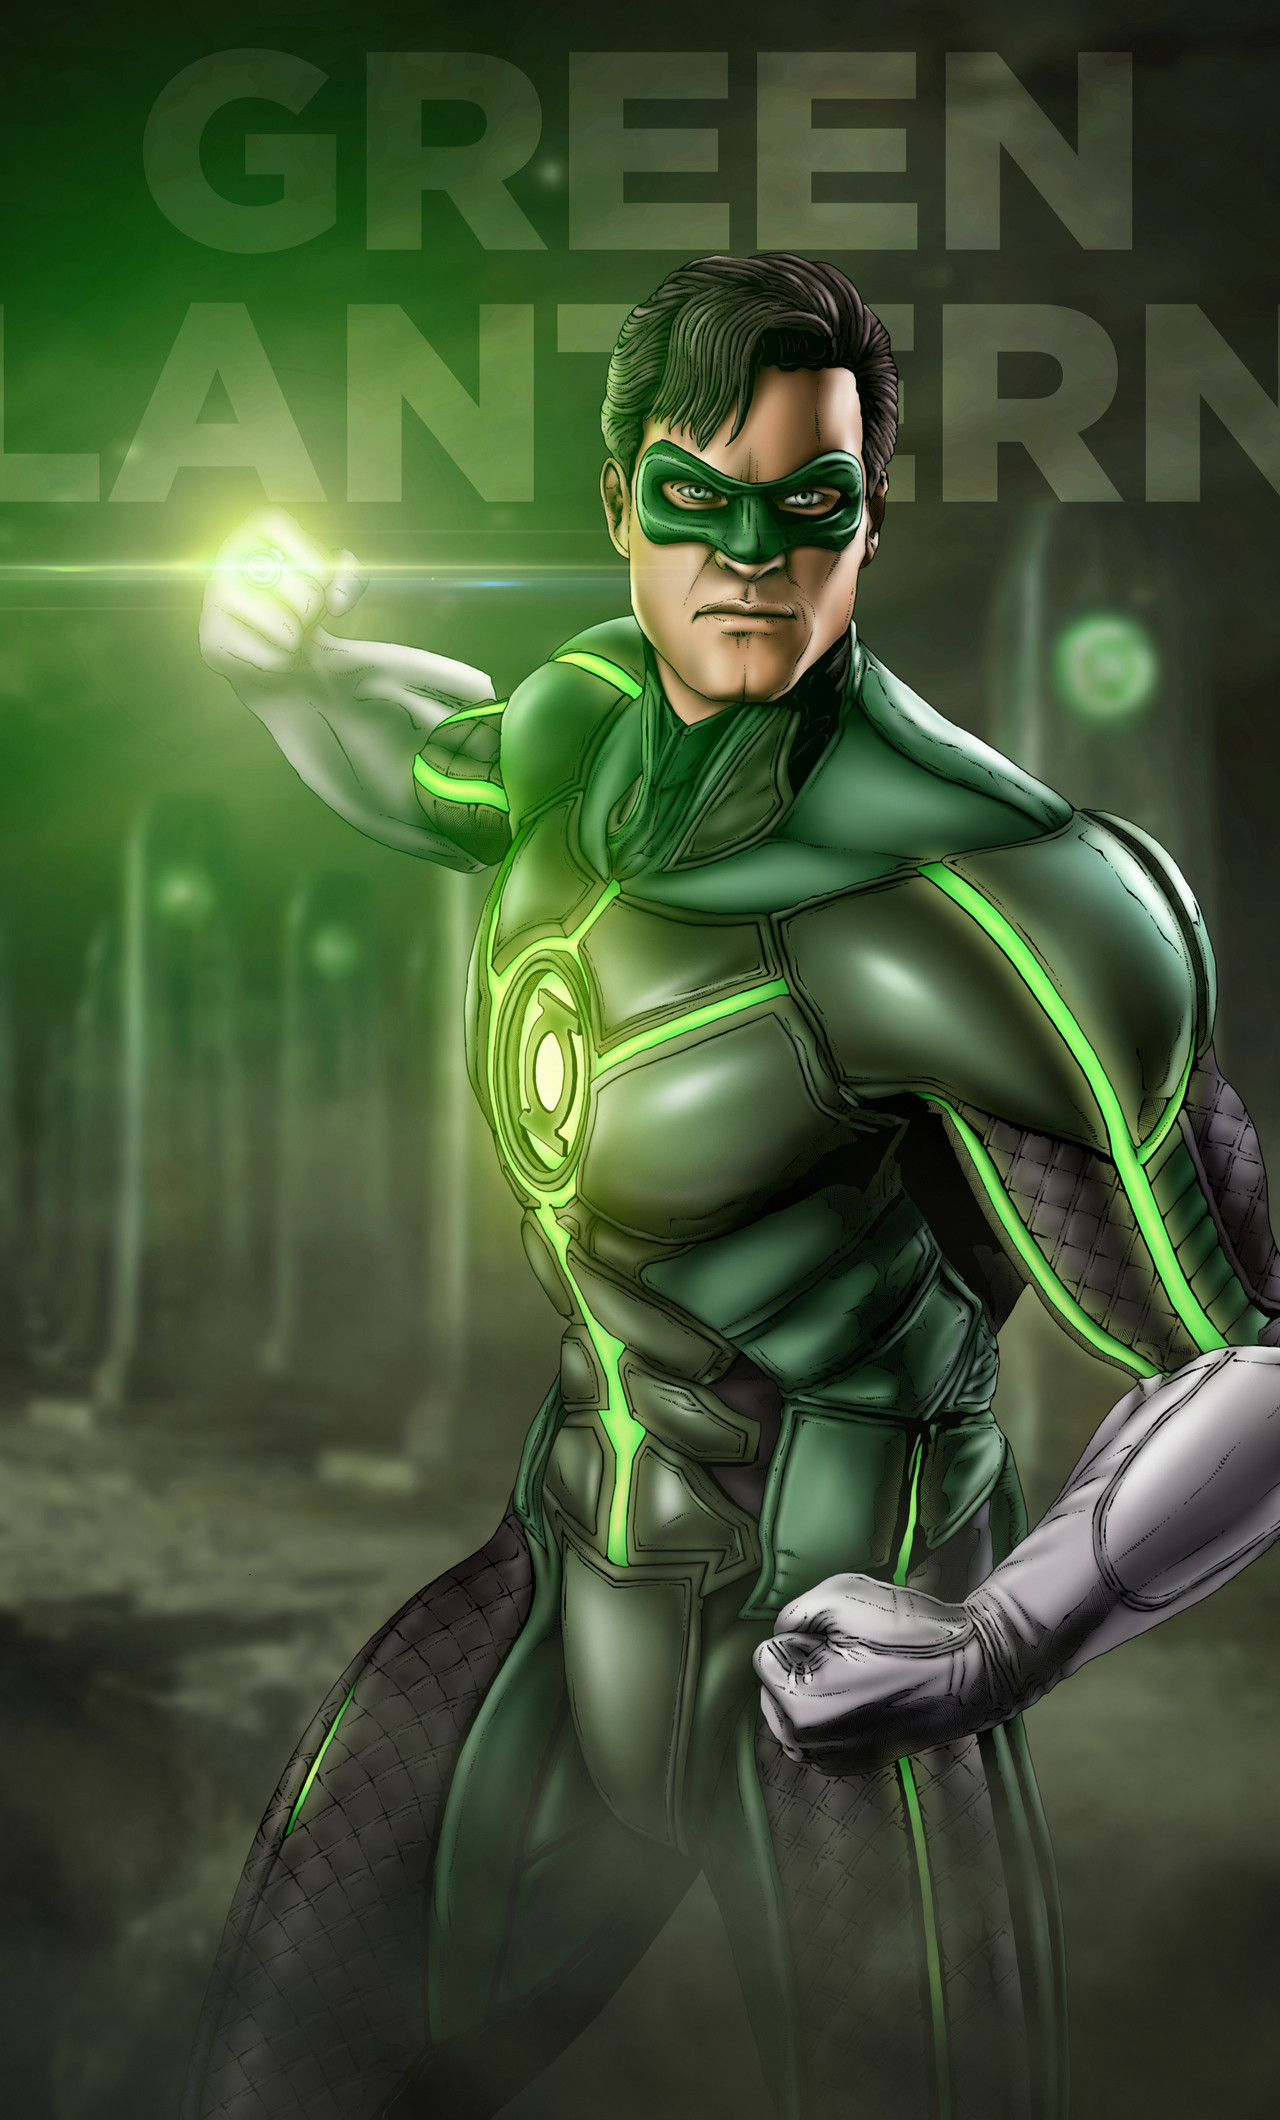 1280x2120 Green Lantern Artwork (iPhone 6+)